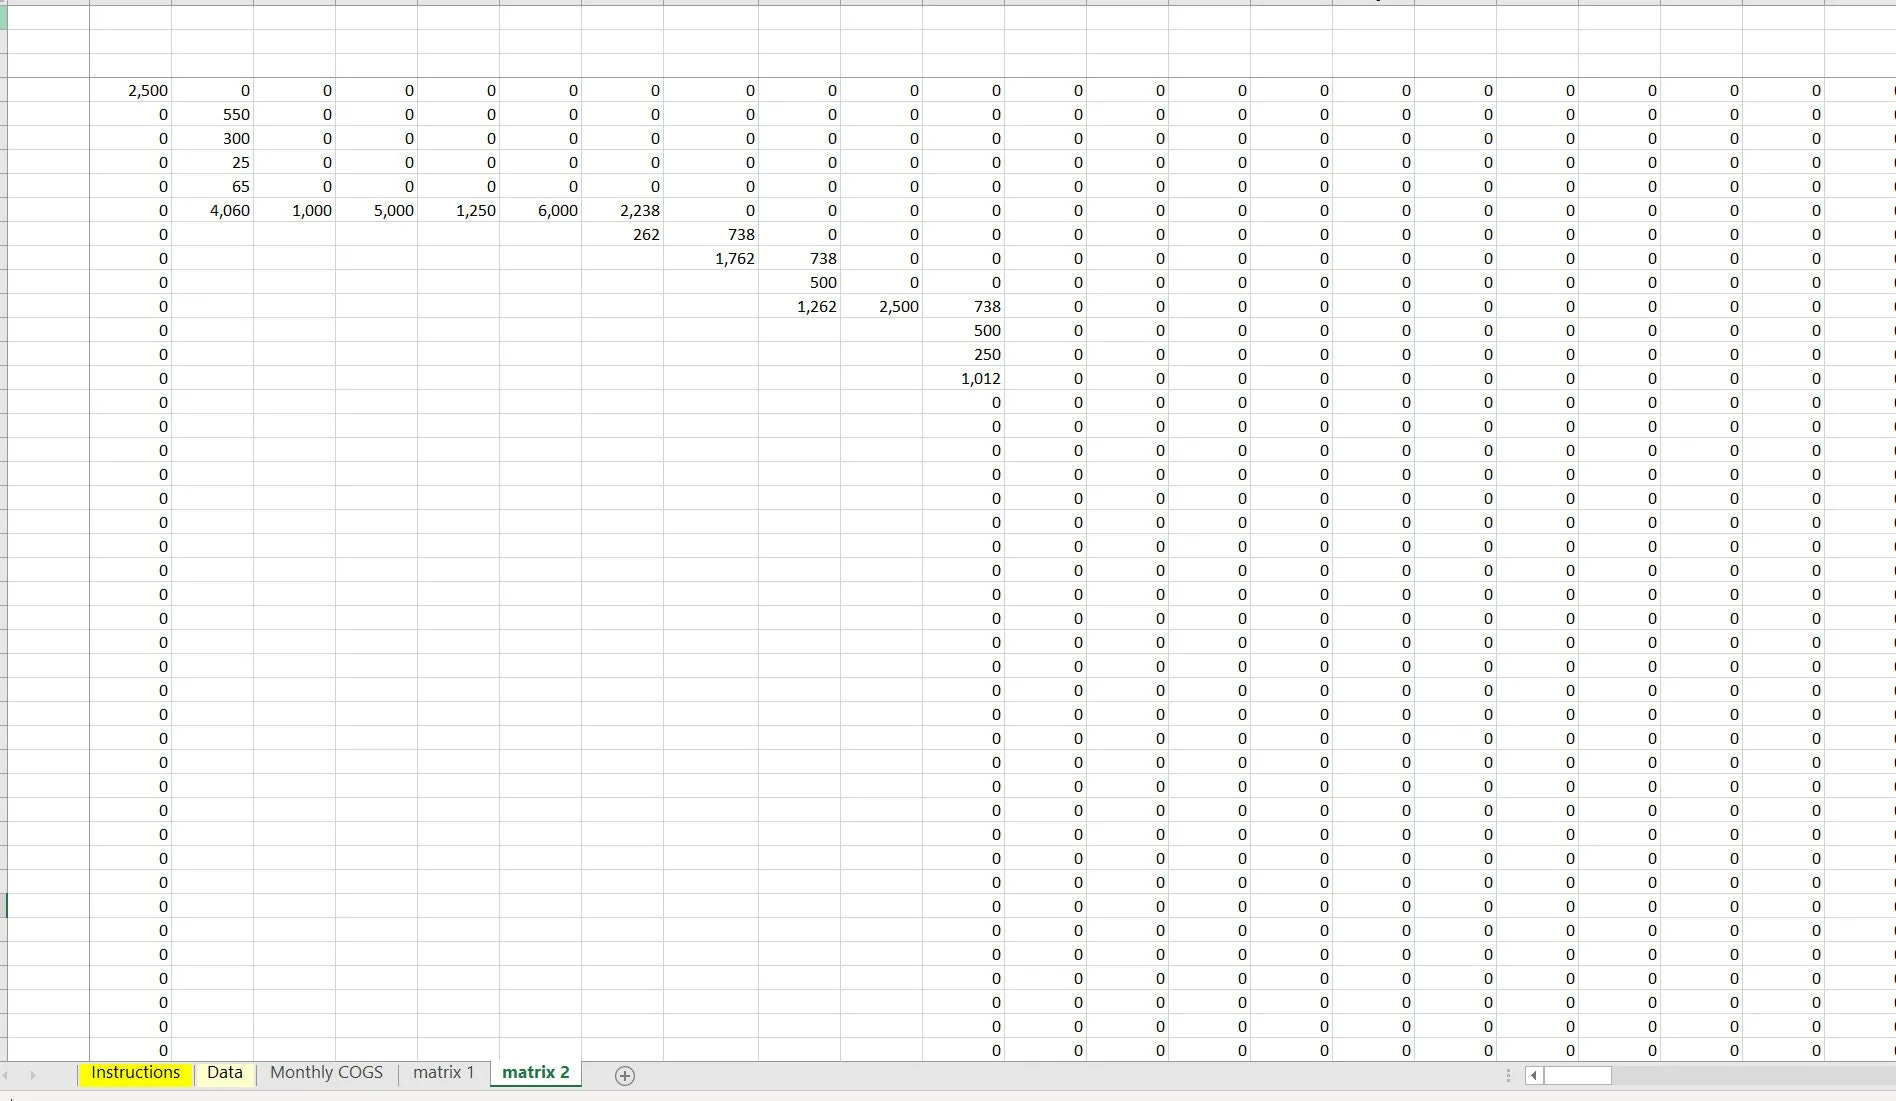 FIFO COGS Calculator (Excel workbook (XLSX)) Preview Image